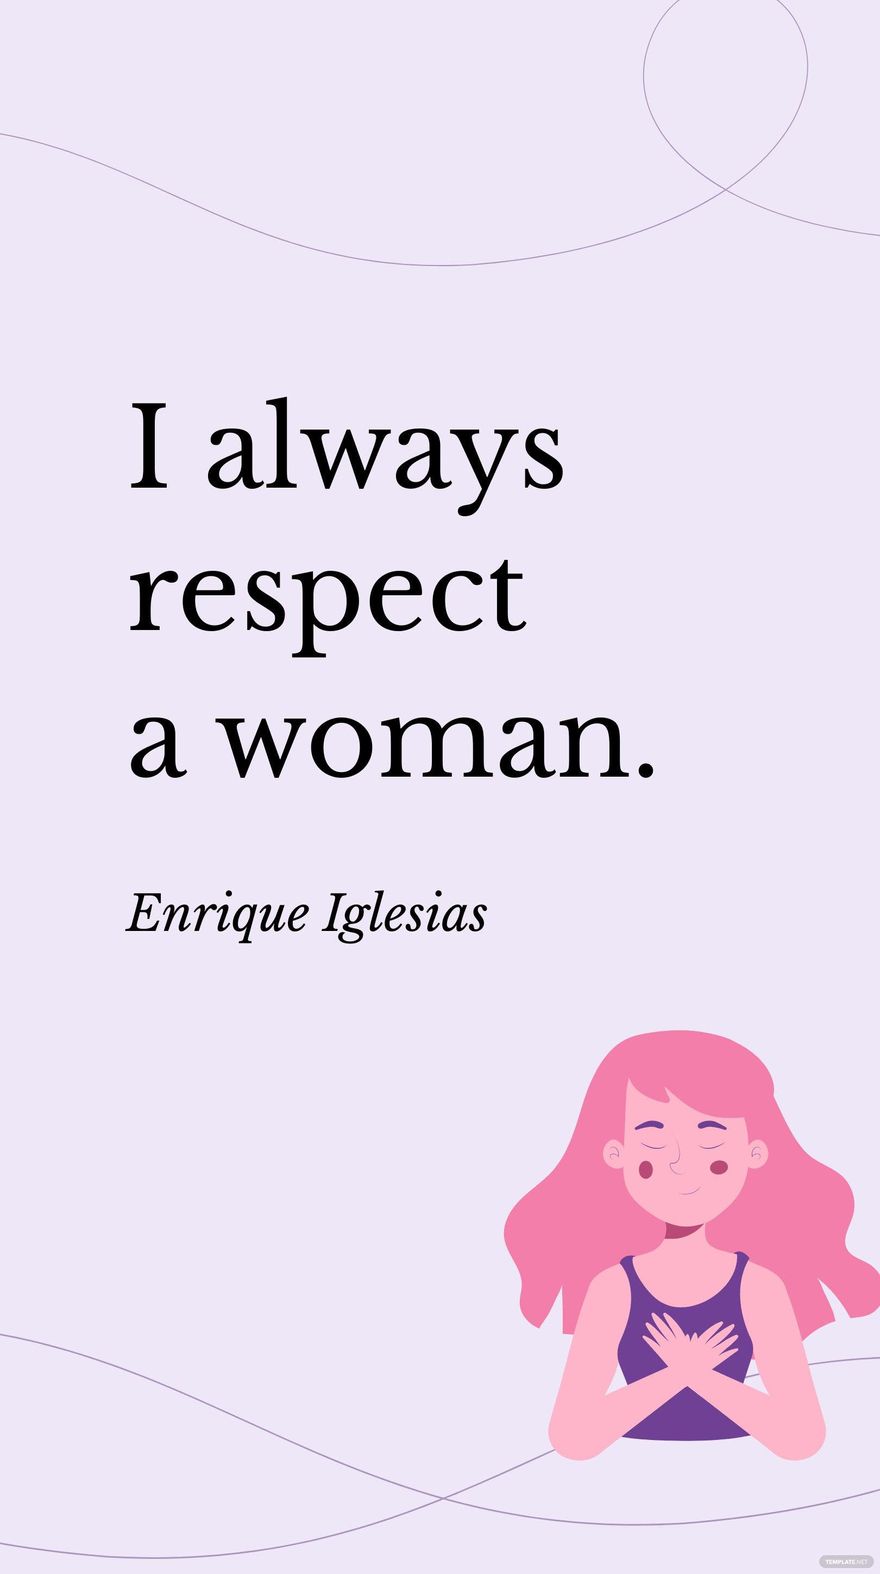 Free Enrique Iglesias - I always respect a woman. in JPG